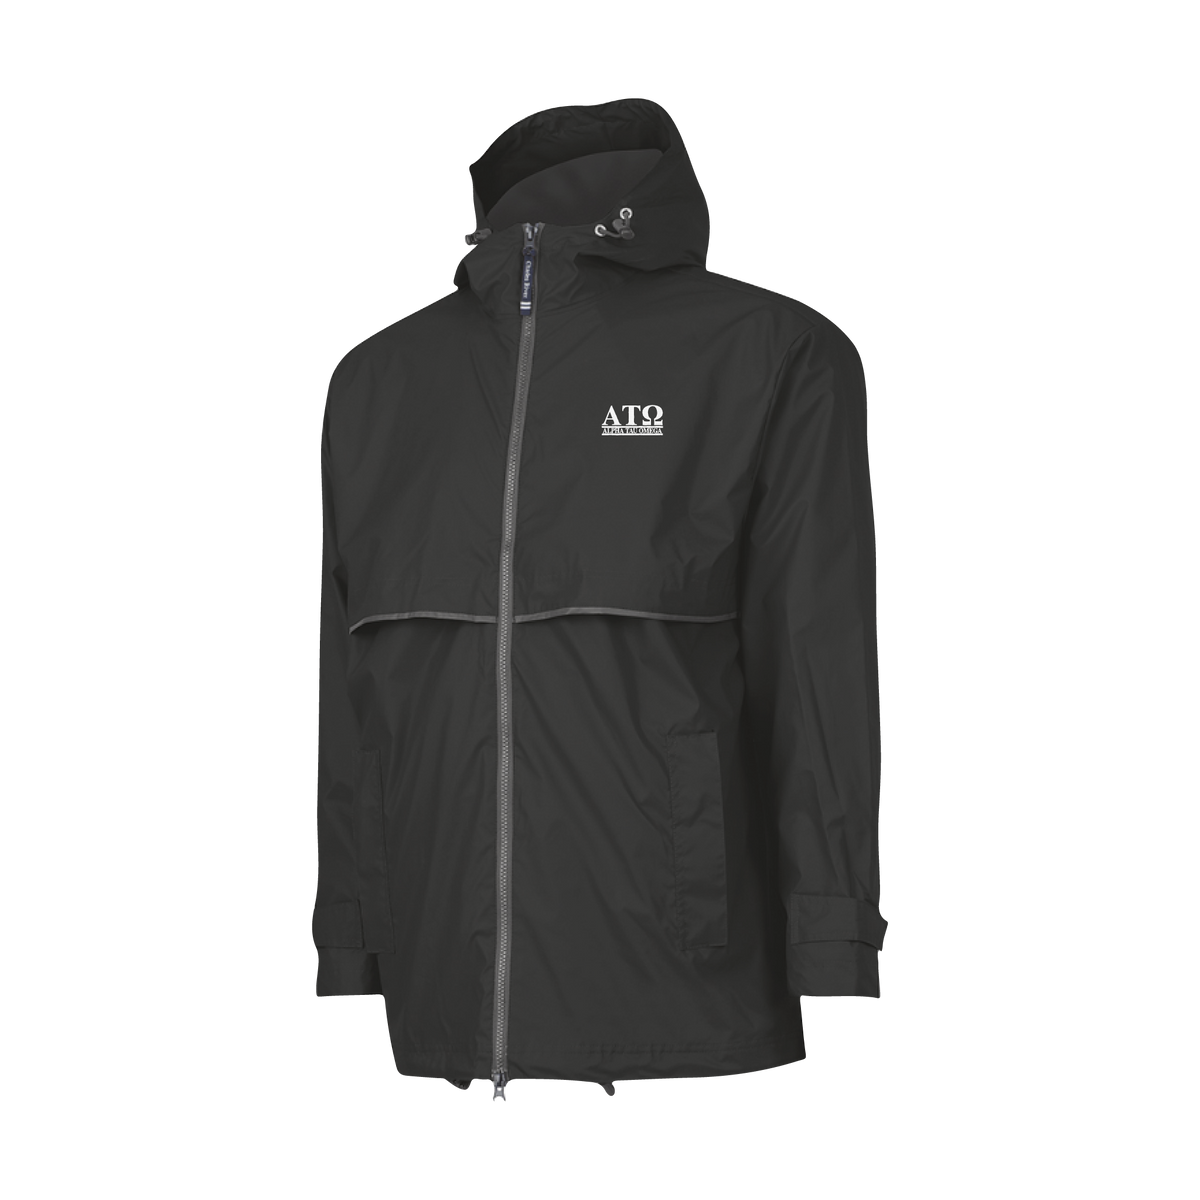 B-Unlimited Greek - Rain Jacket (ATO) - Charles River - 9199 - New Englander Rain Jacket - Black